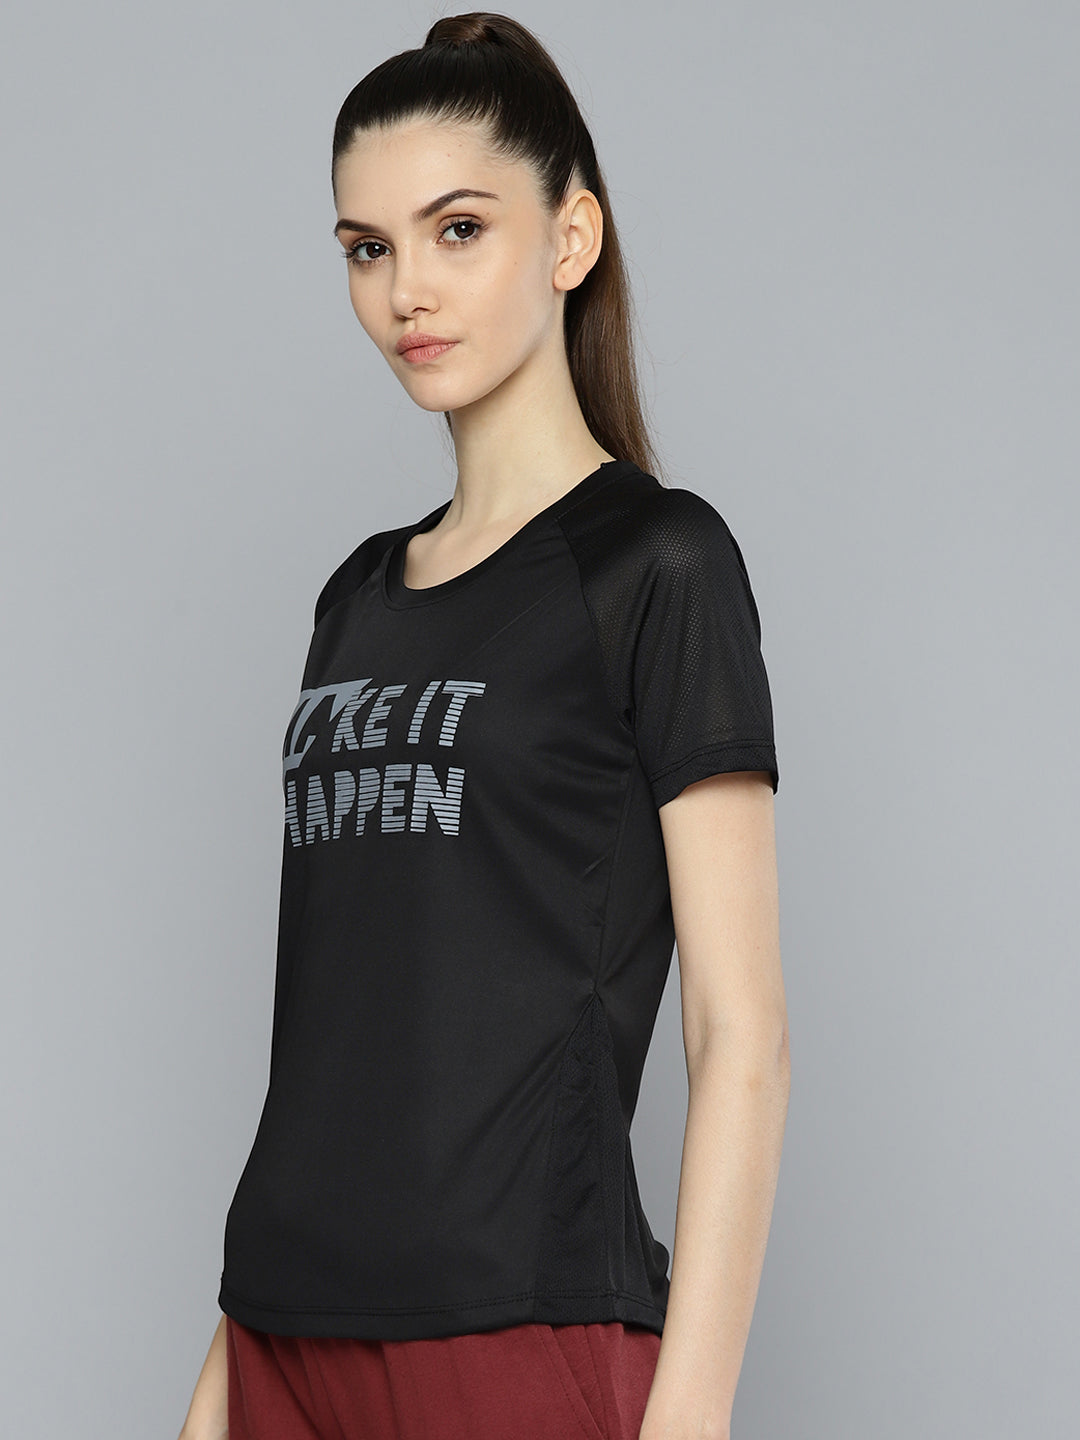 Alcis Women Black  White Typography Printed Slim Fit T-shirt